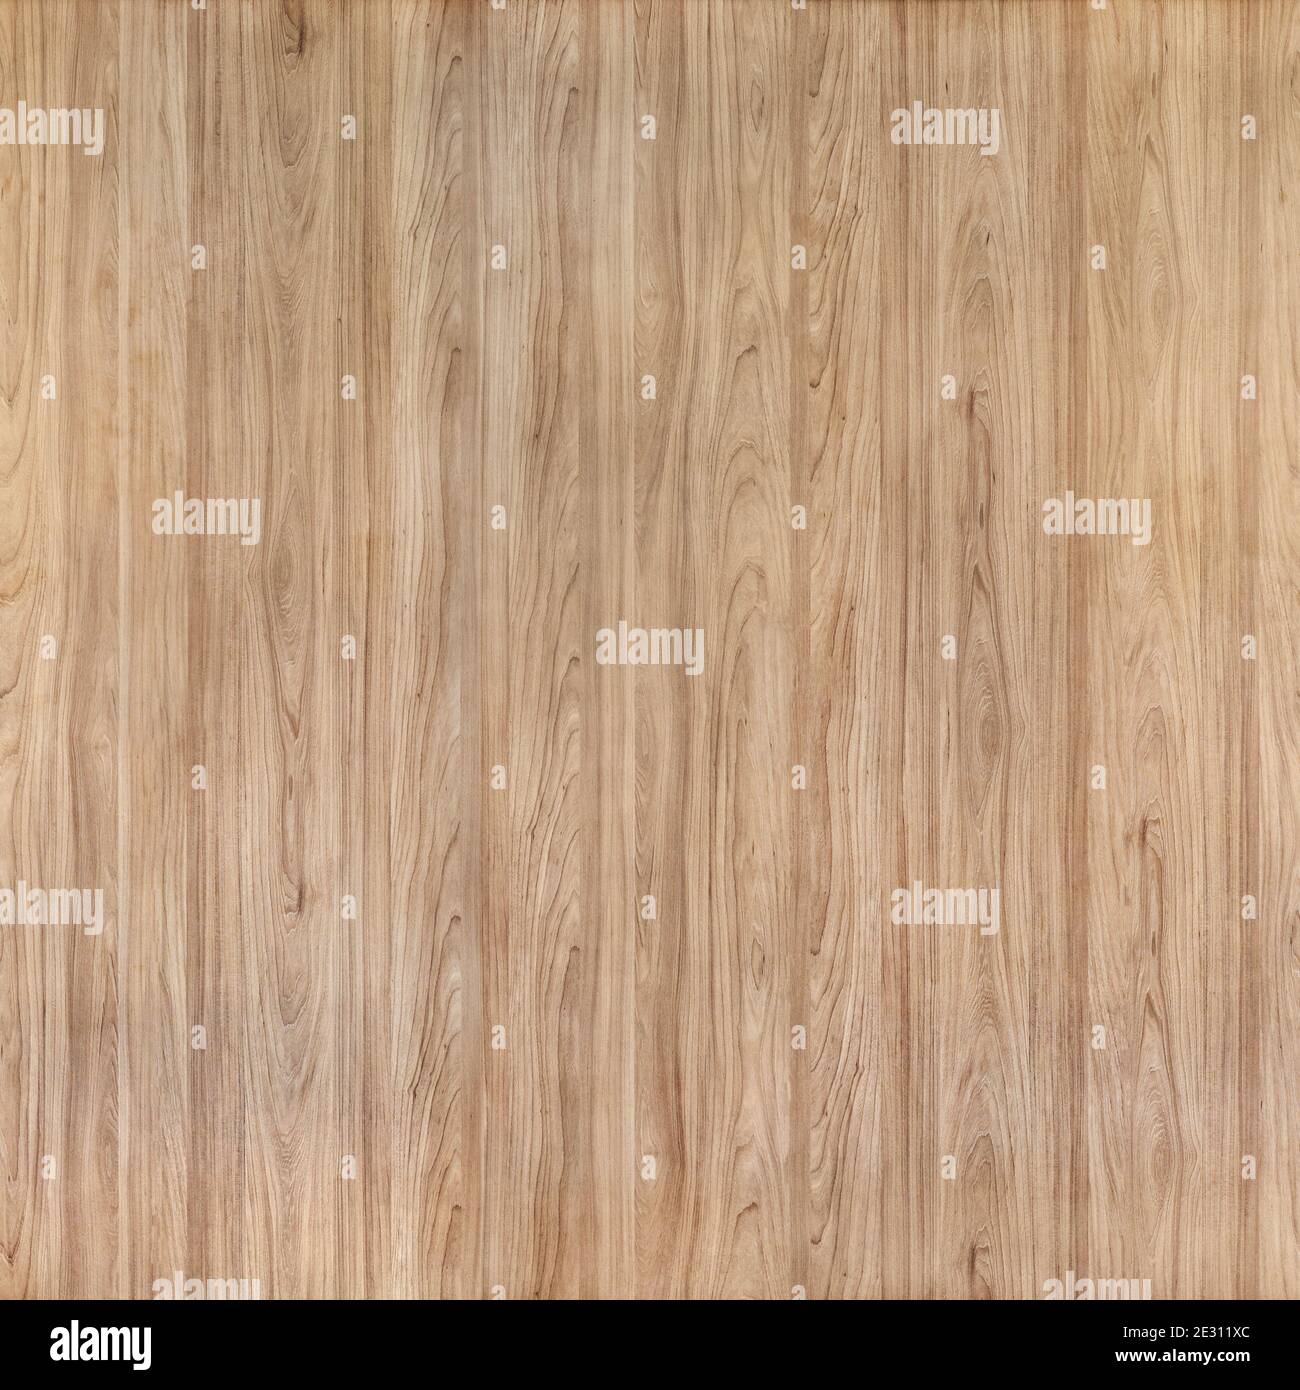 Large wood veneer texture or background Stock Photo